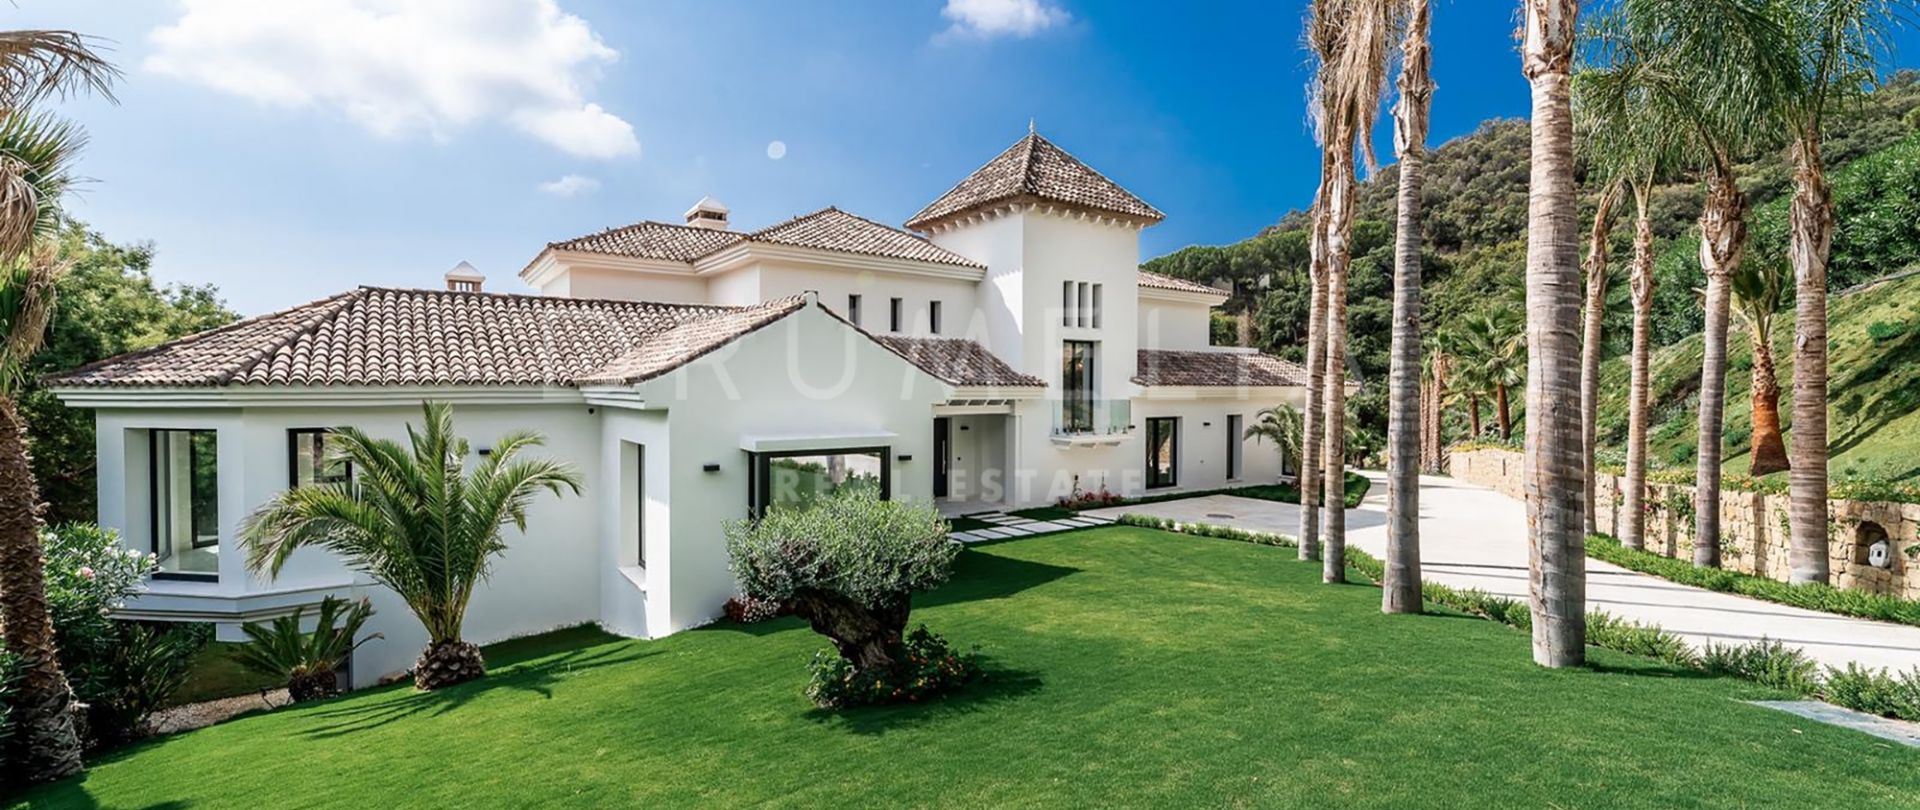 Exquisita moderna y lujosa Villa en generosa parcela en venta en La Zagaleta, Benahavis